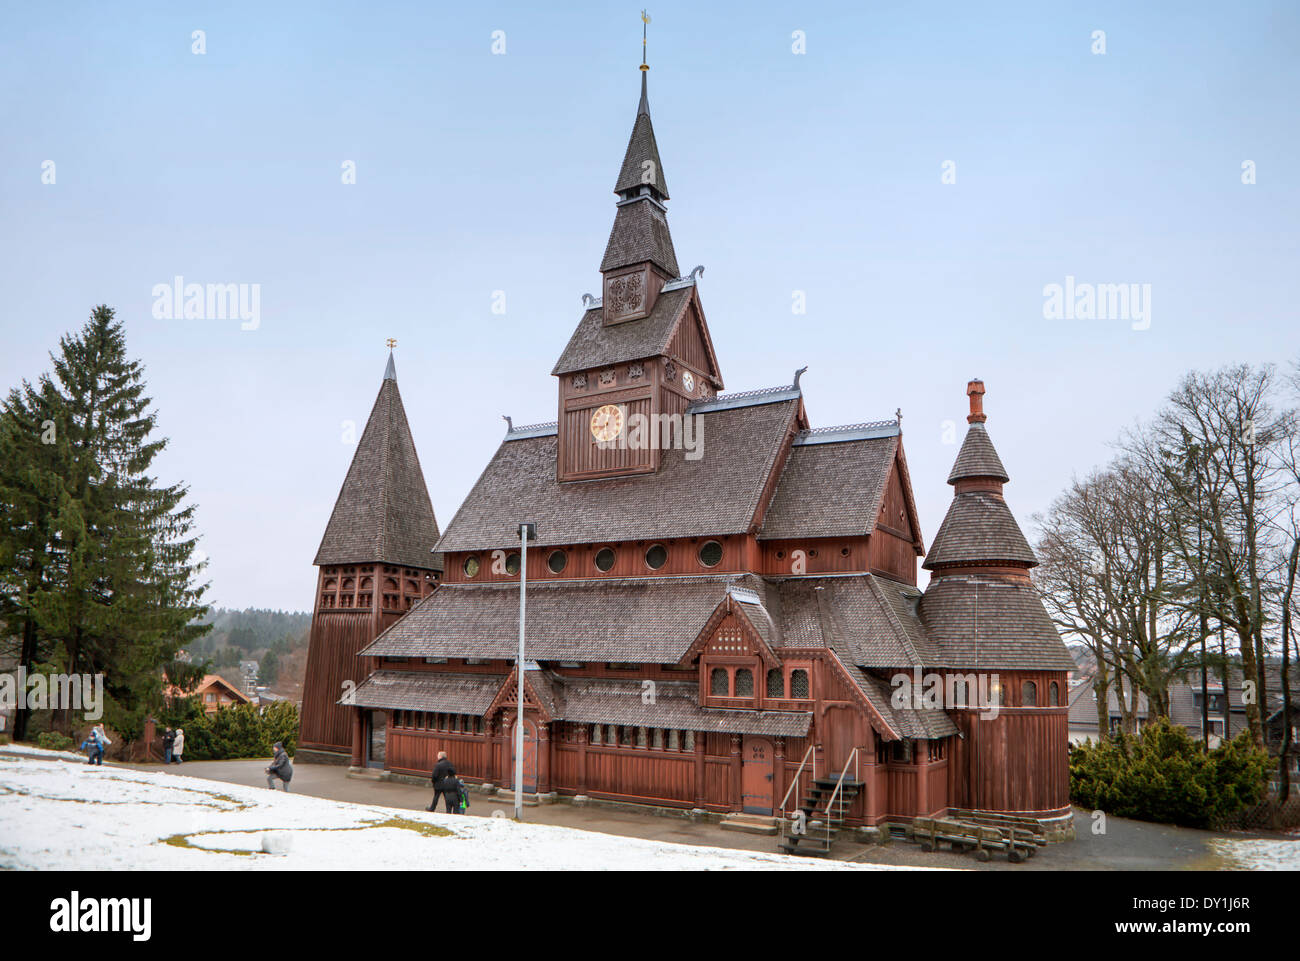 The Protestant Gustav Adolf Stave Church, Hahnenklee, Harz region, Germany, Europe Stock Photo